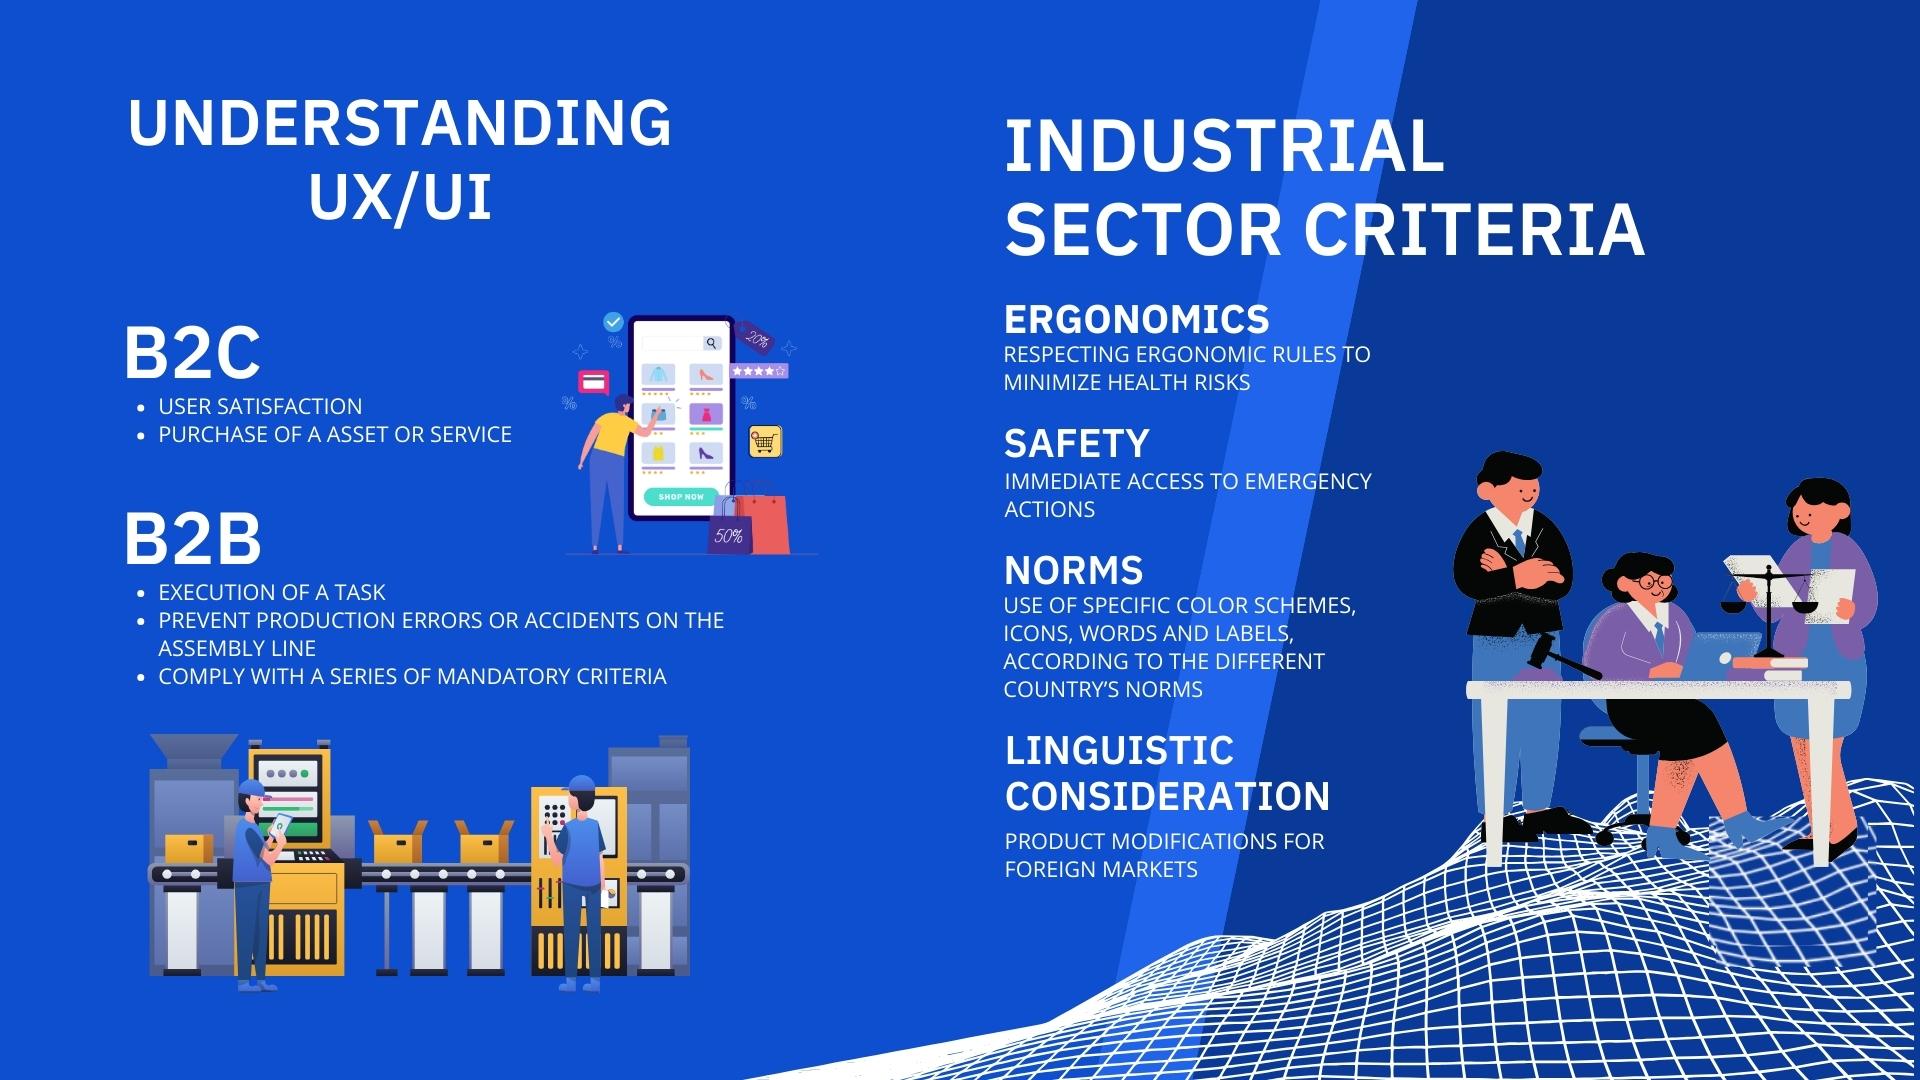 Industrial Sector Criteria